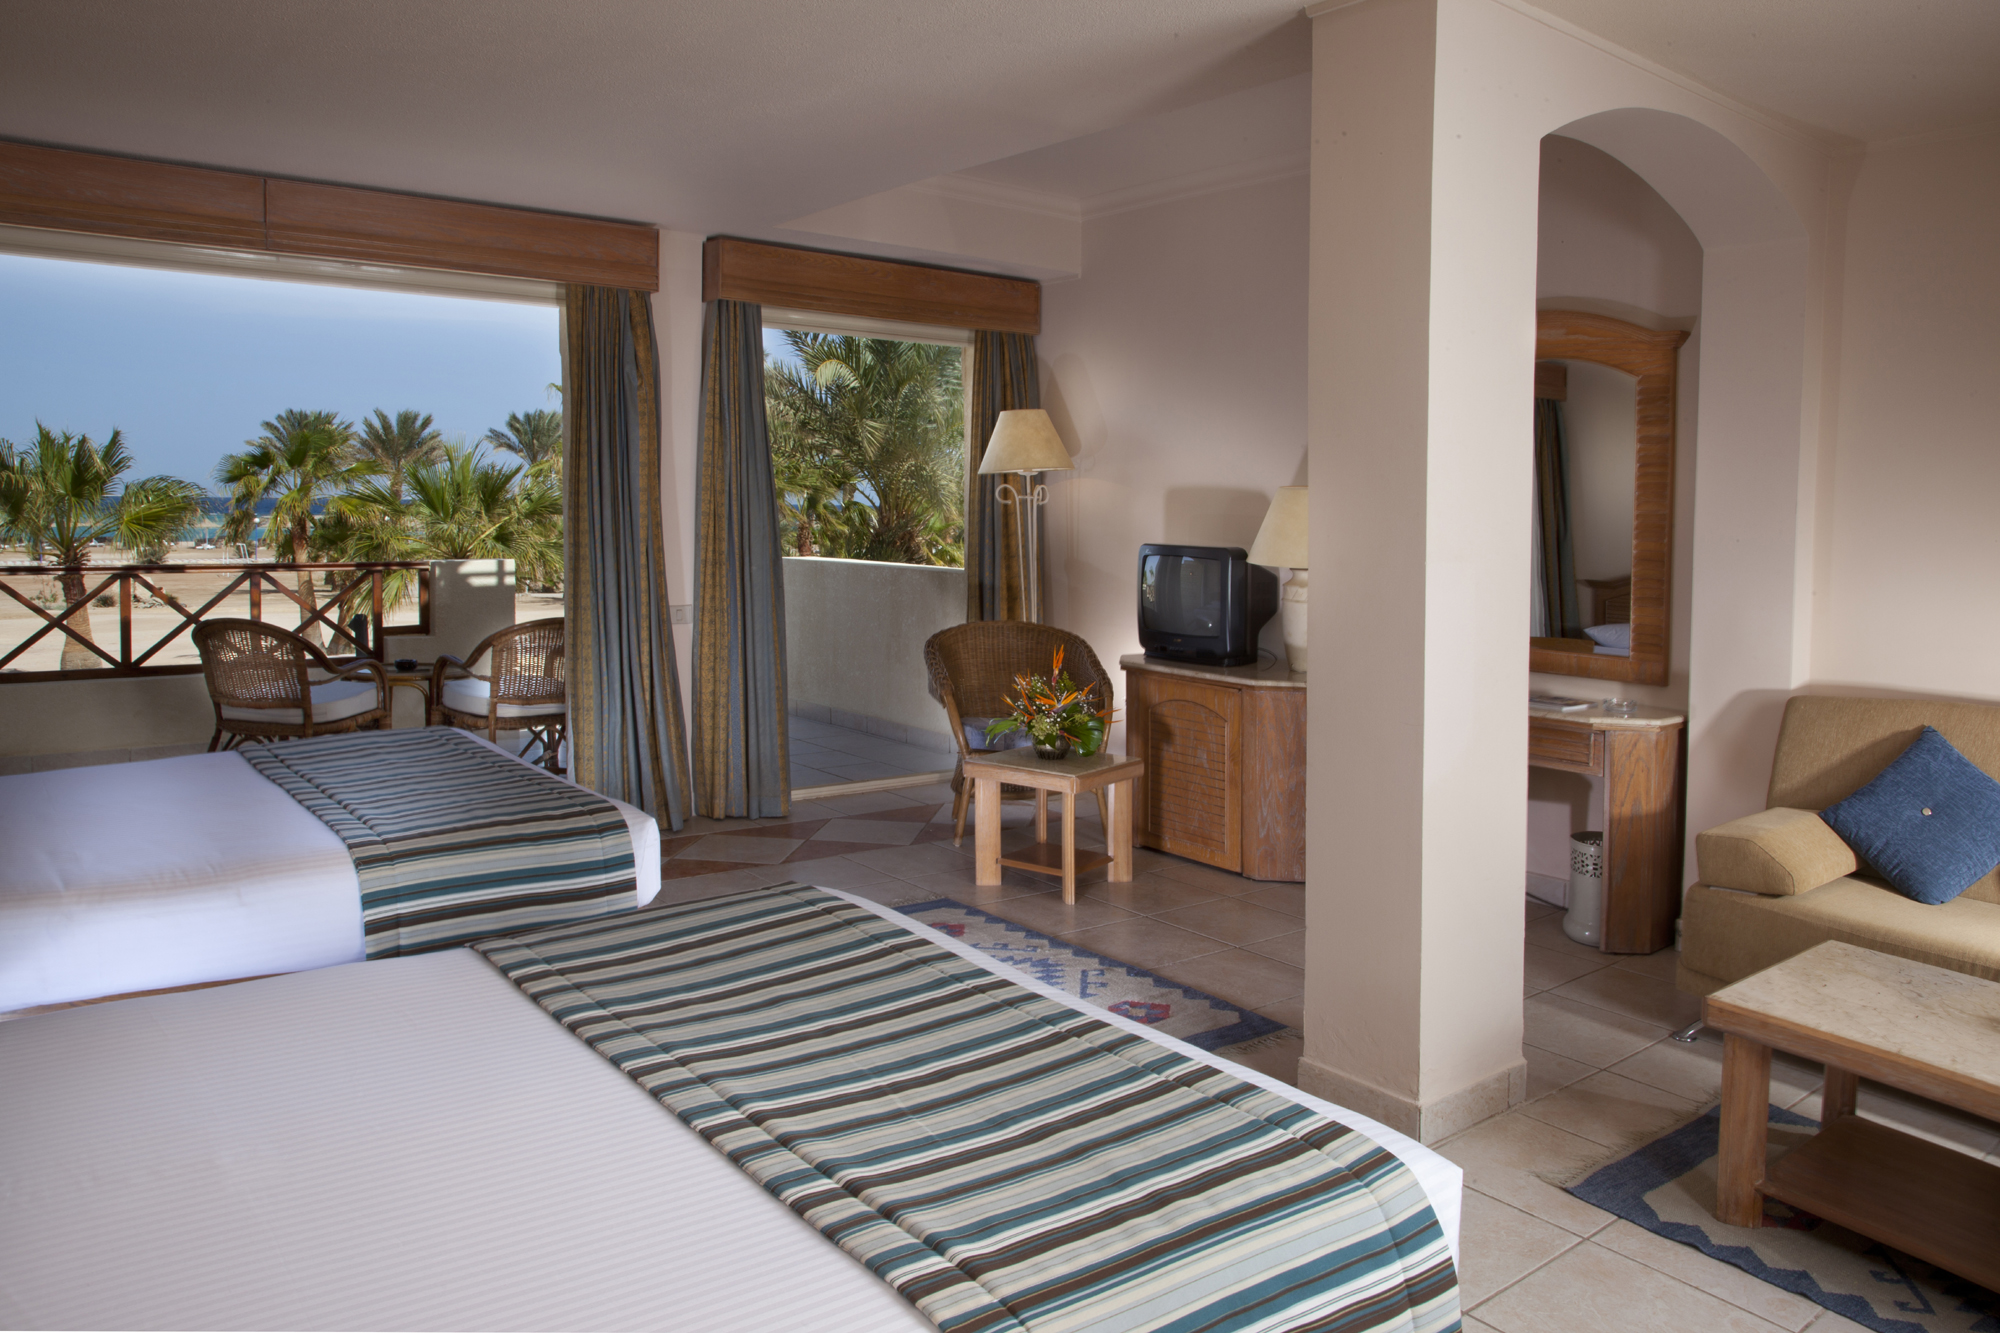 Coral beach rotana resort. Coral Beach Resort Hurghada 4. Coral Beach Rotana Resort 4 Египет Хургада. Отель Coral Beach Hotel Hurghada. Отель Корал Бич Хургада Египет.